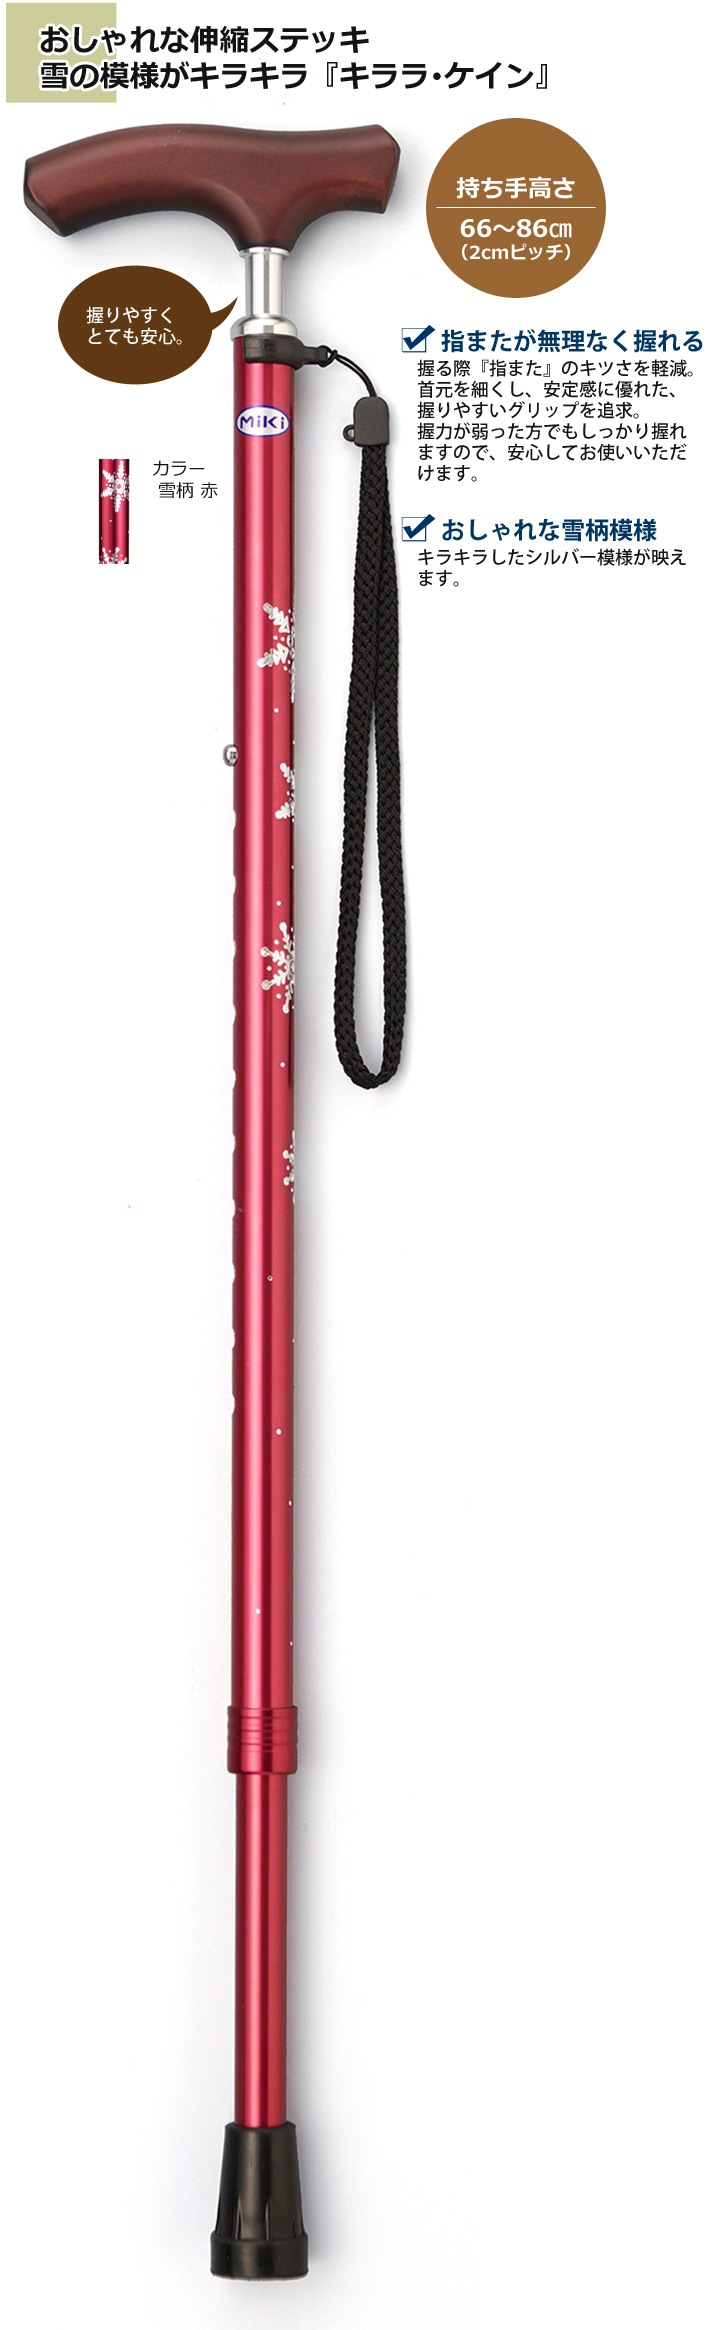 Mrz キララ ケイン スリムネック伸縮杖 雪柄 赤 ミキ シルバーカー 歩行用品通販のロッキー